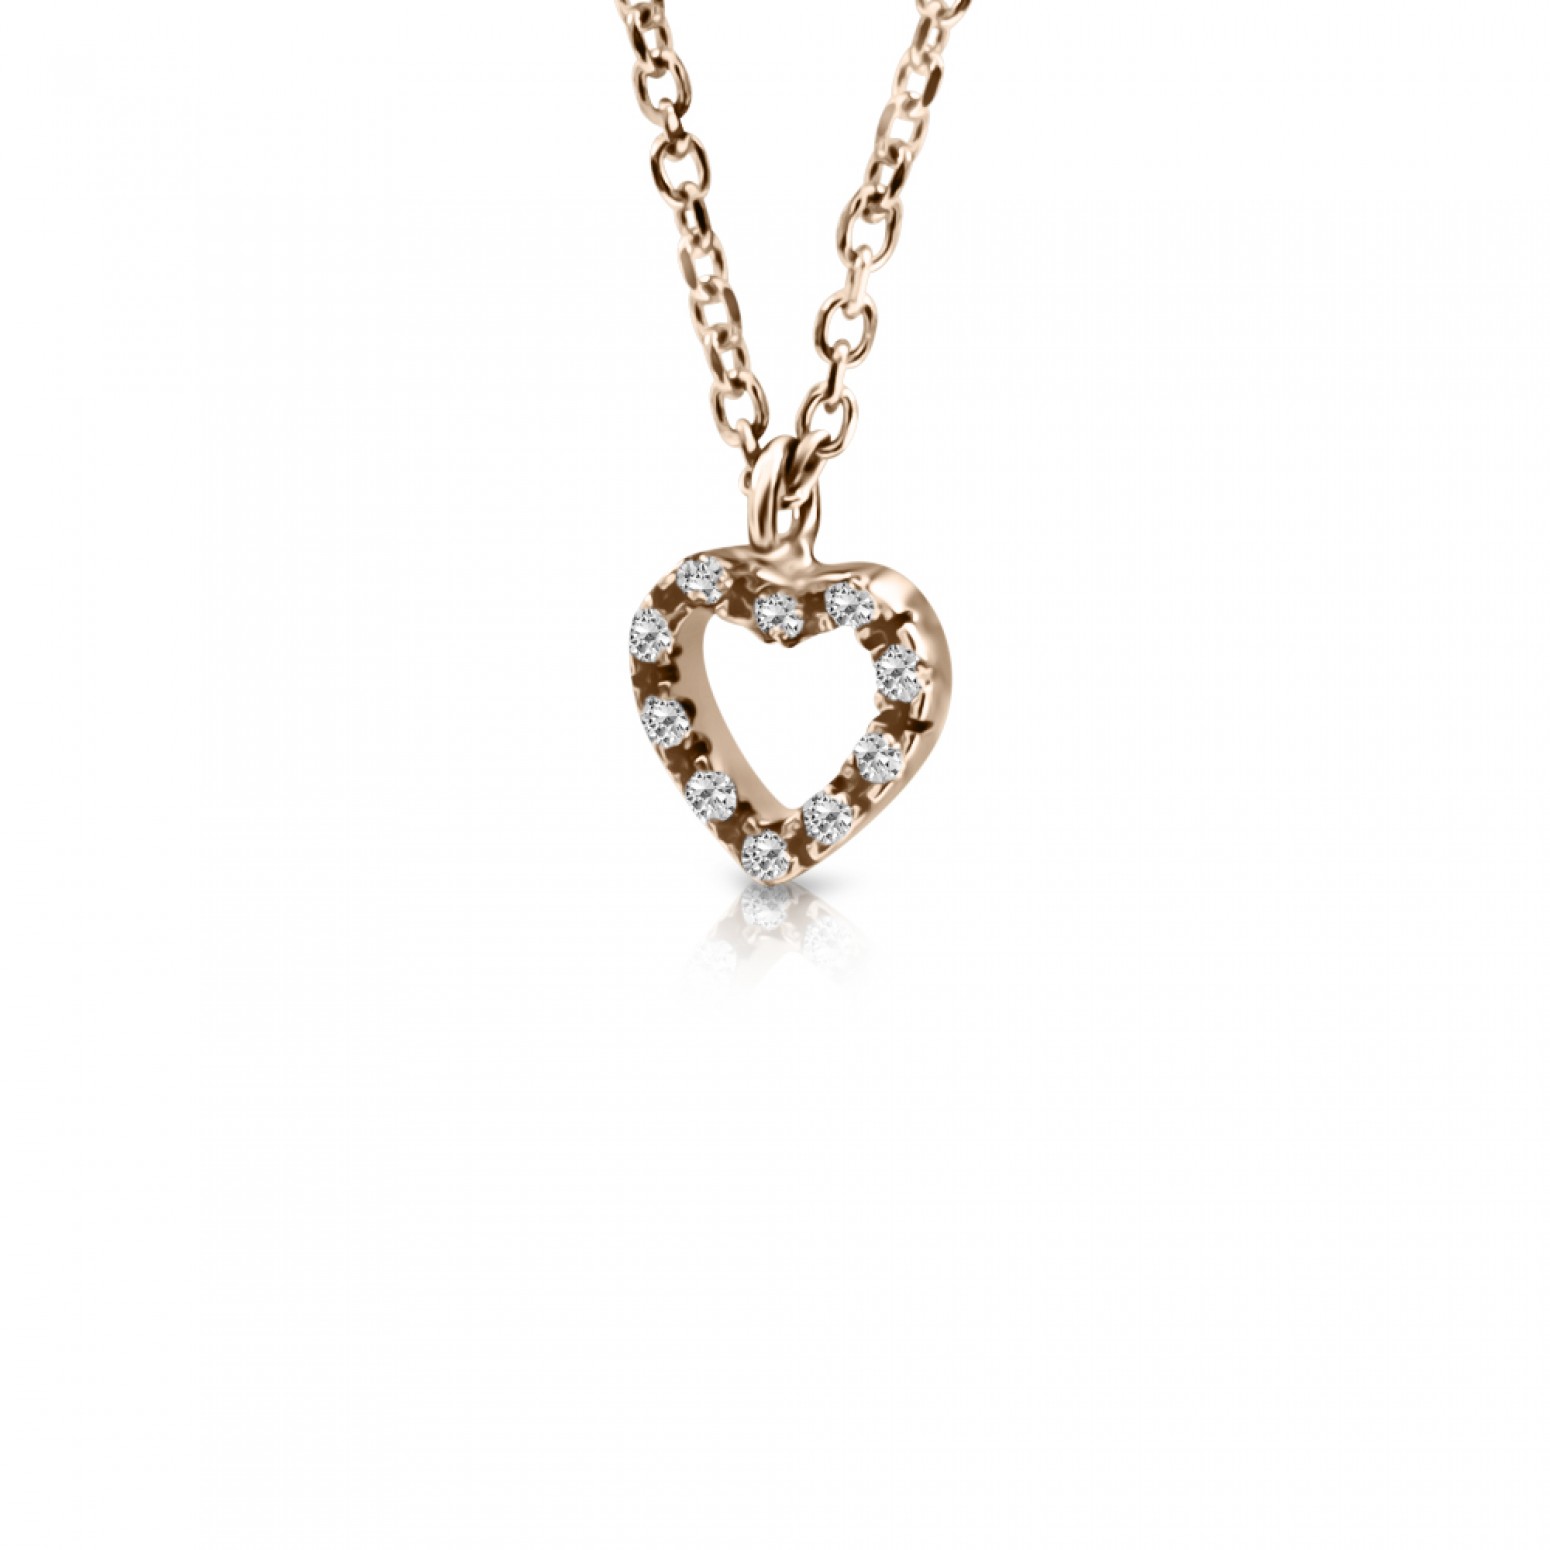 Heart necklace, Κ14 pink gold with zircon, ko2387 NECKLACES Κοσμηματα - chrilia.gr